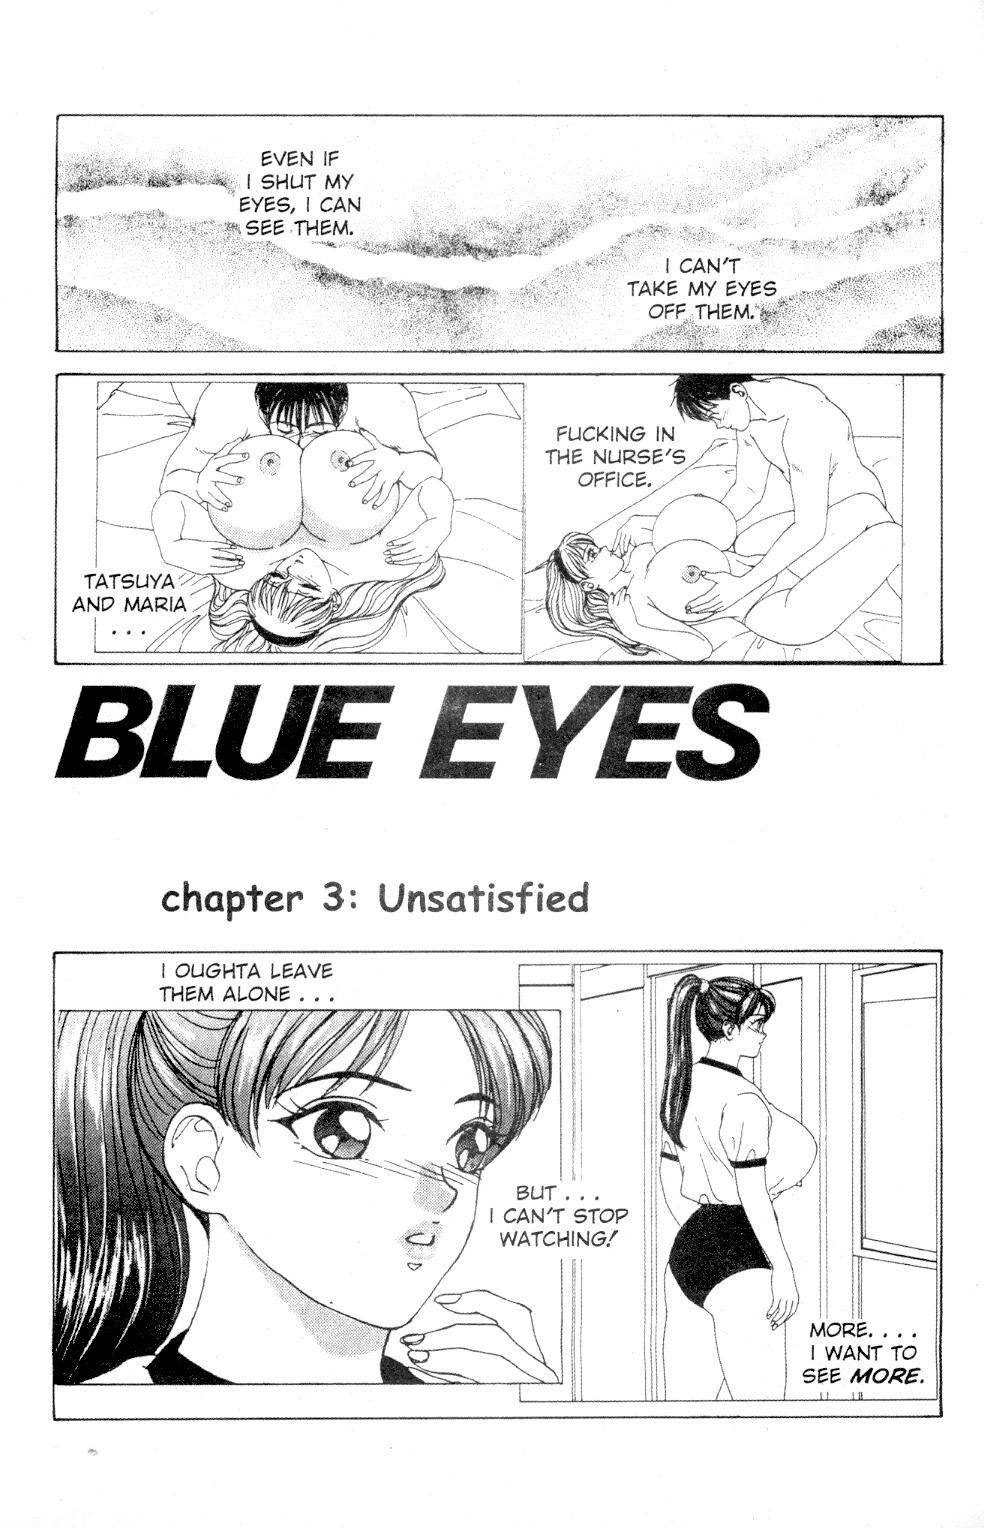 【西巻徹】BlueEyes Vol 1 Issue 3 [英語]